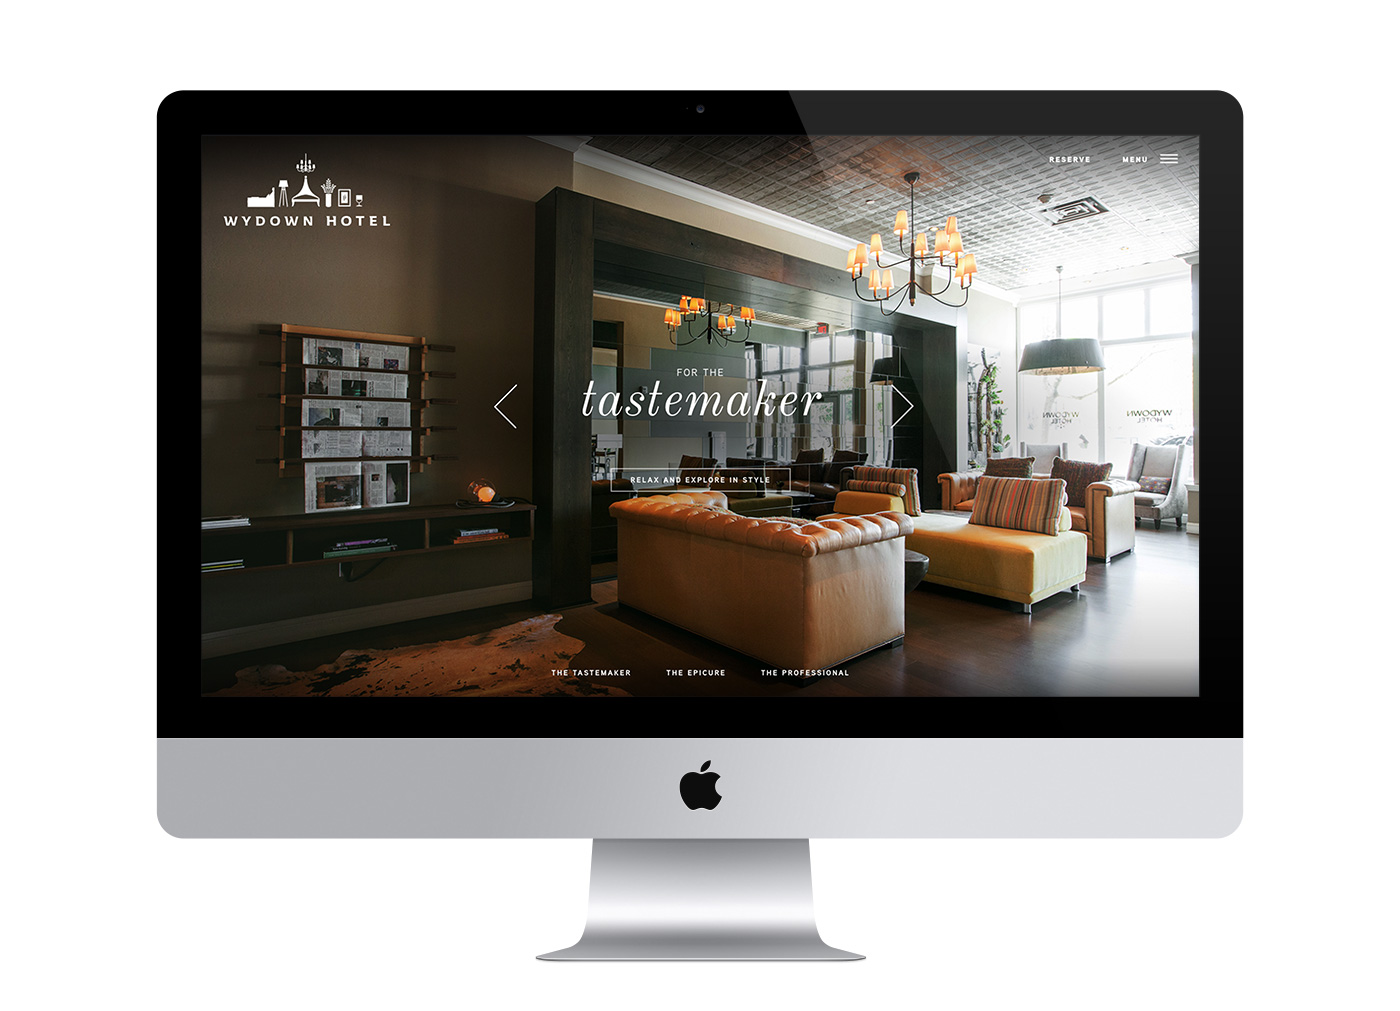 Wydown Hotel website on desktop